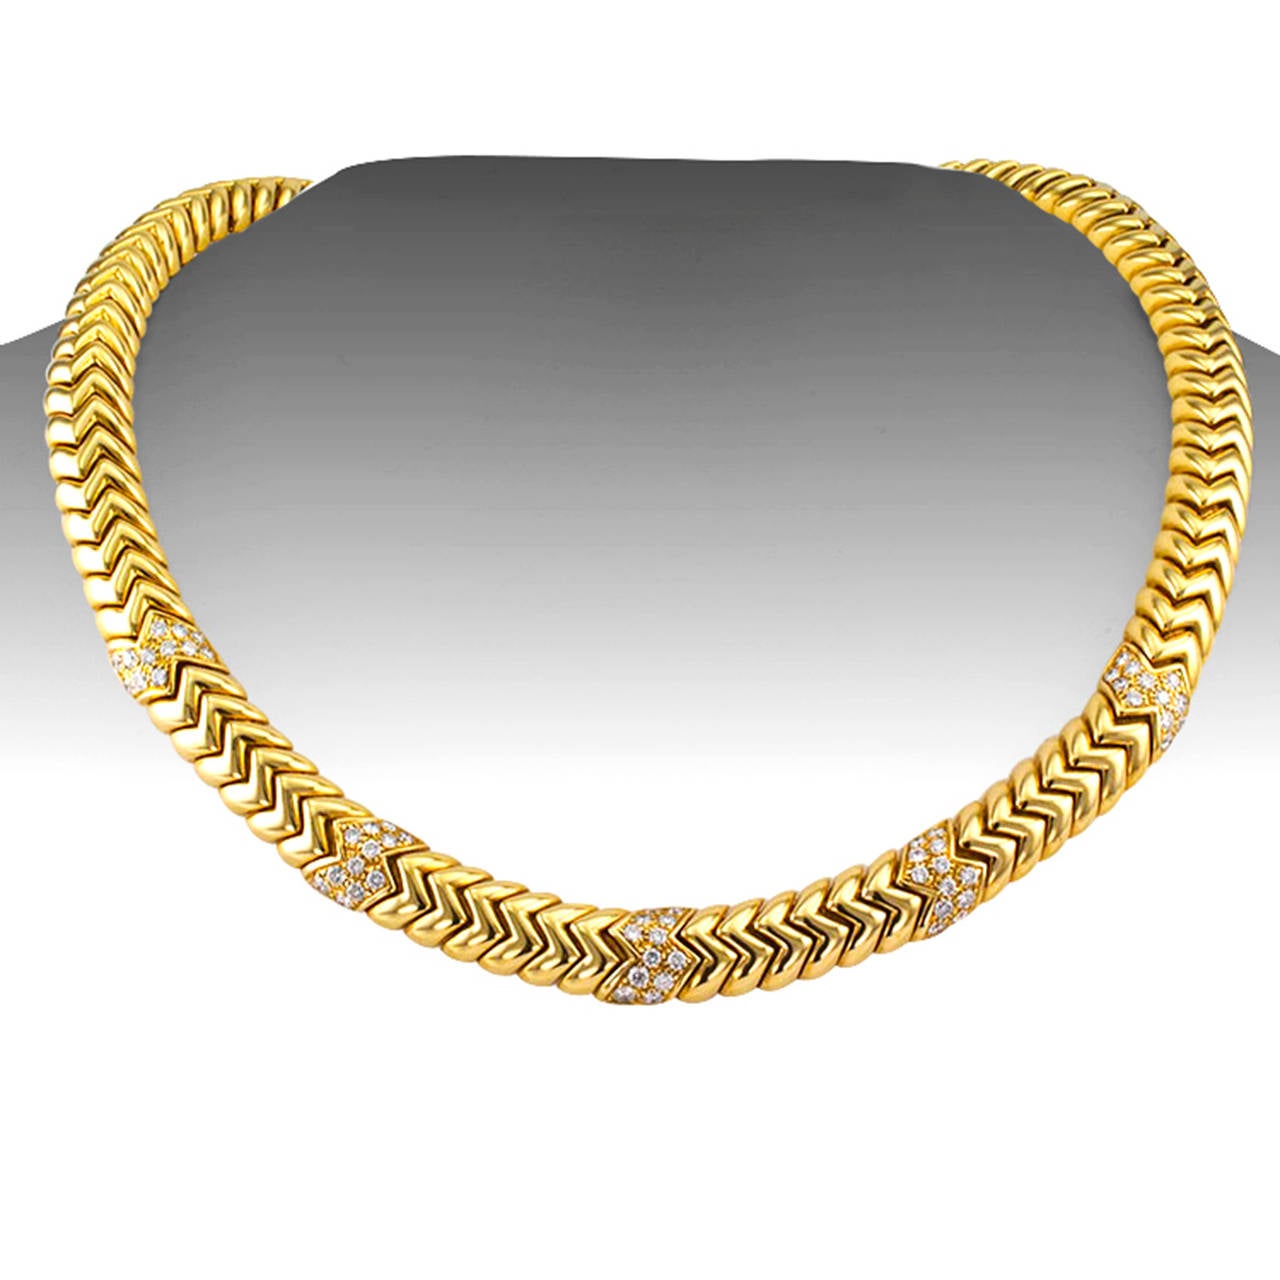 Bvlgari 18 Karat Gold And Diamond Spiga Necklace

